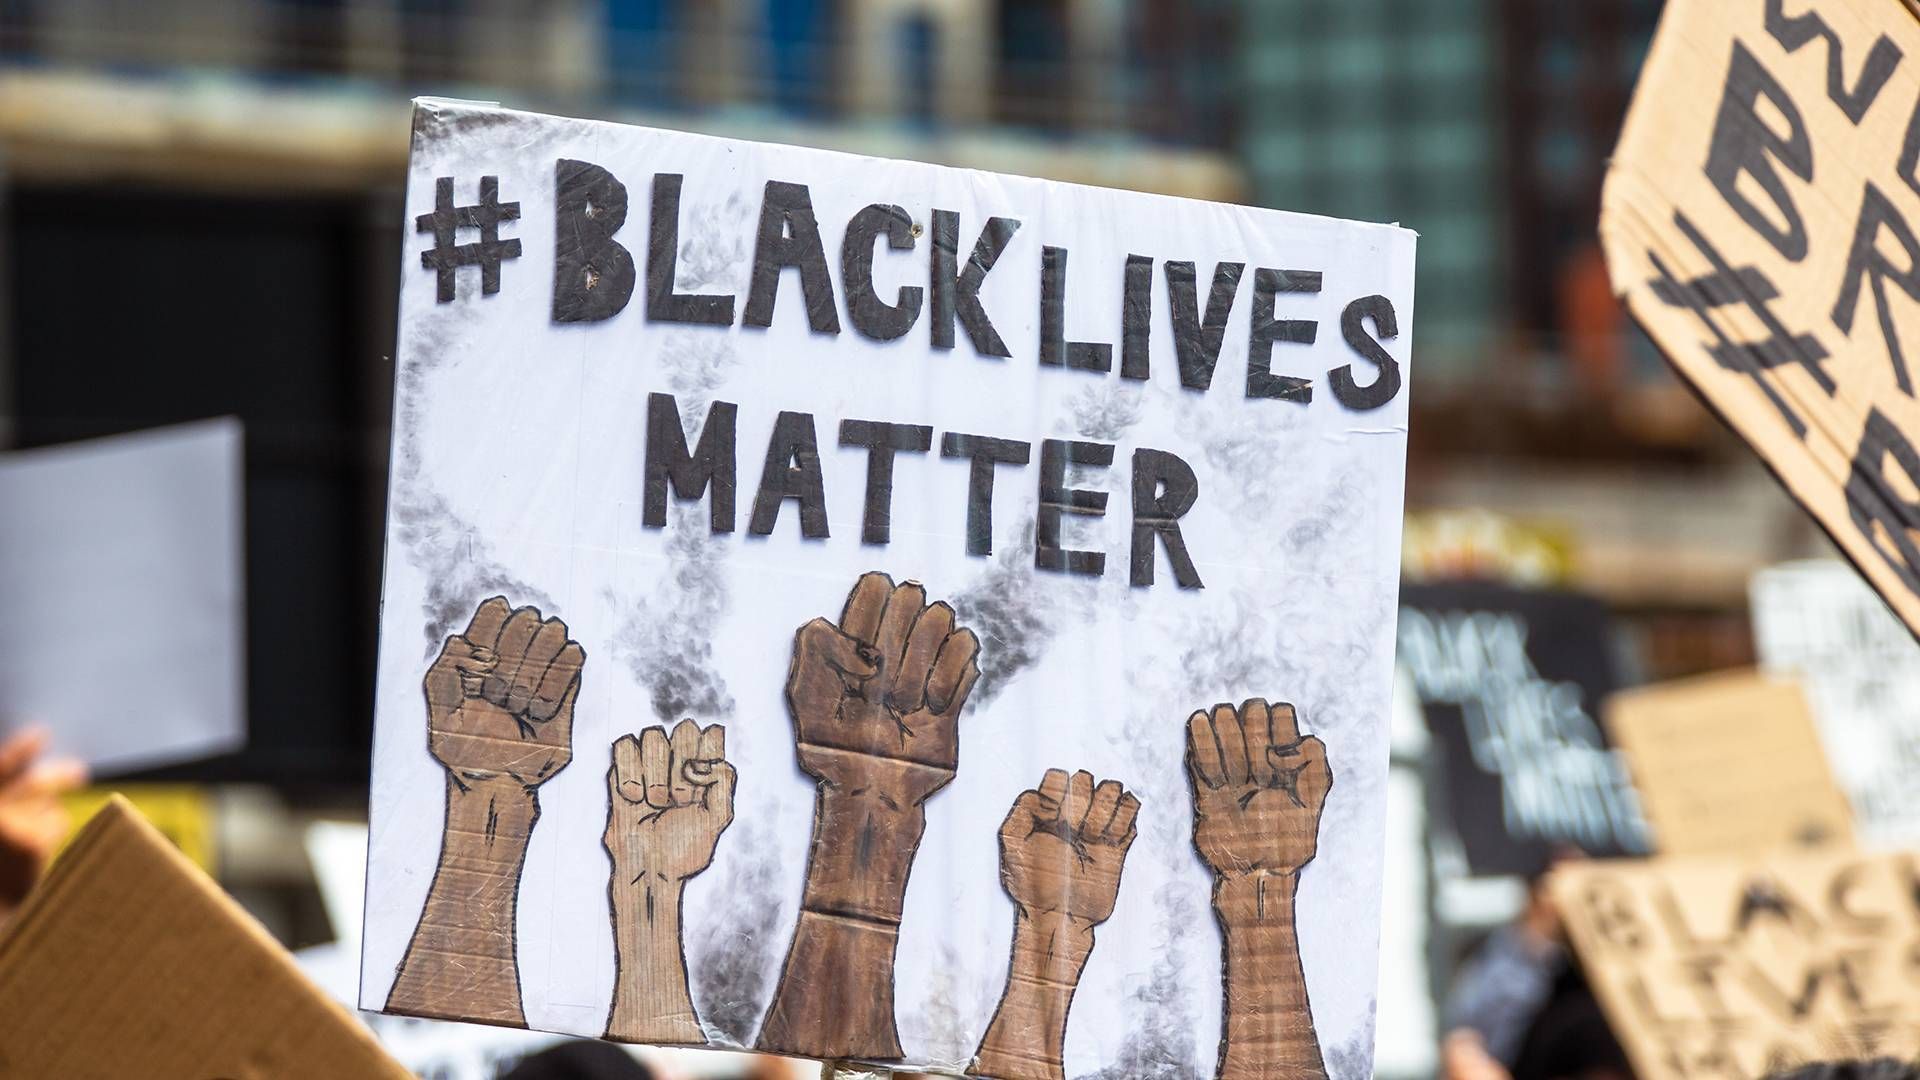 #BlackLivesMatter sign | Credit: thomathzac23 // Adobe